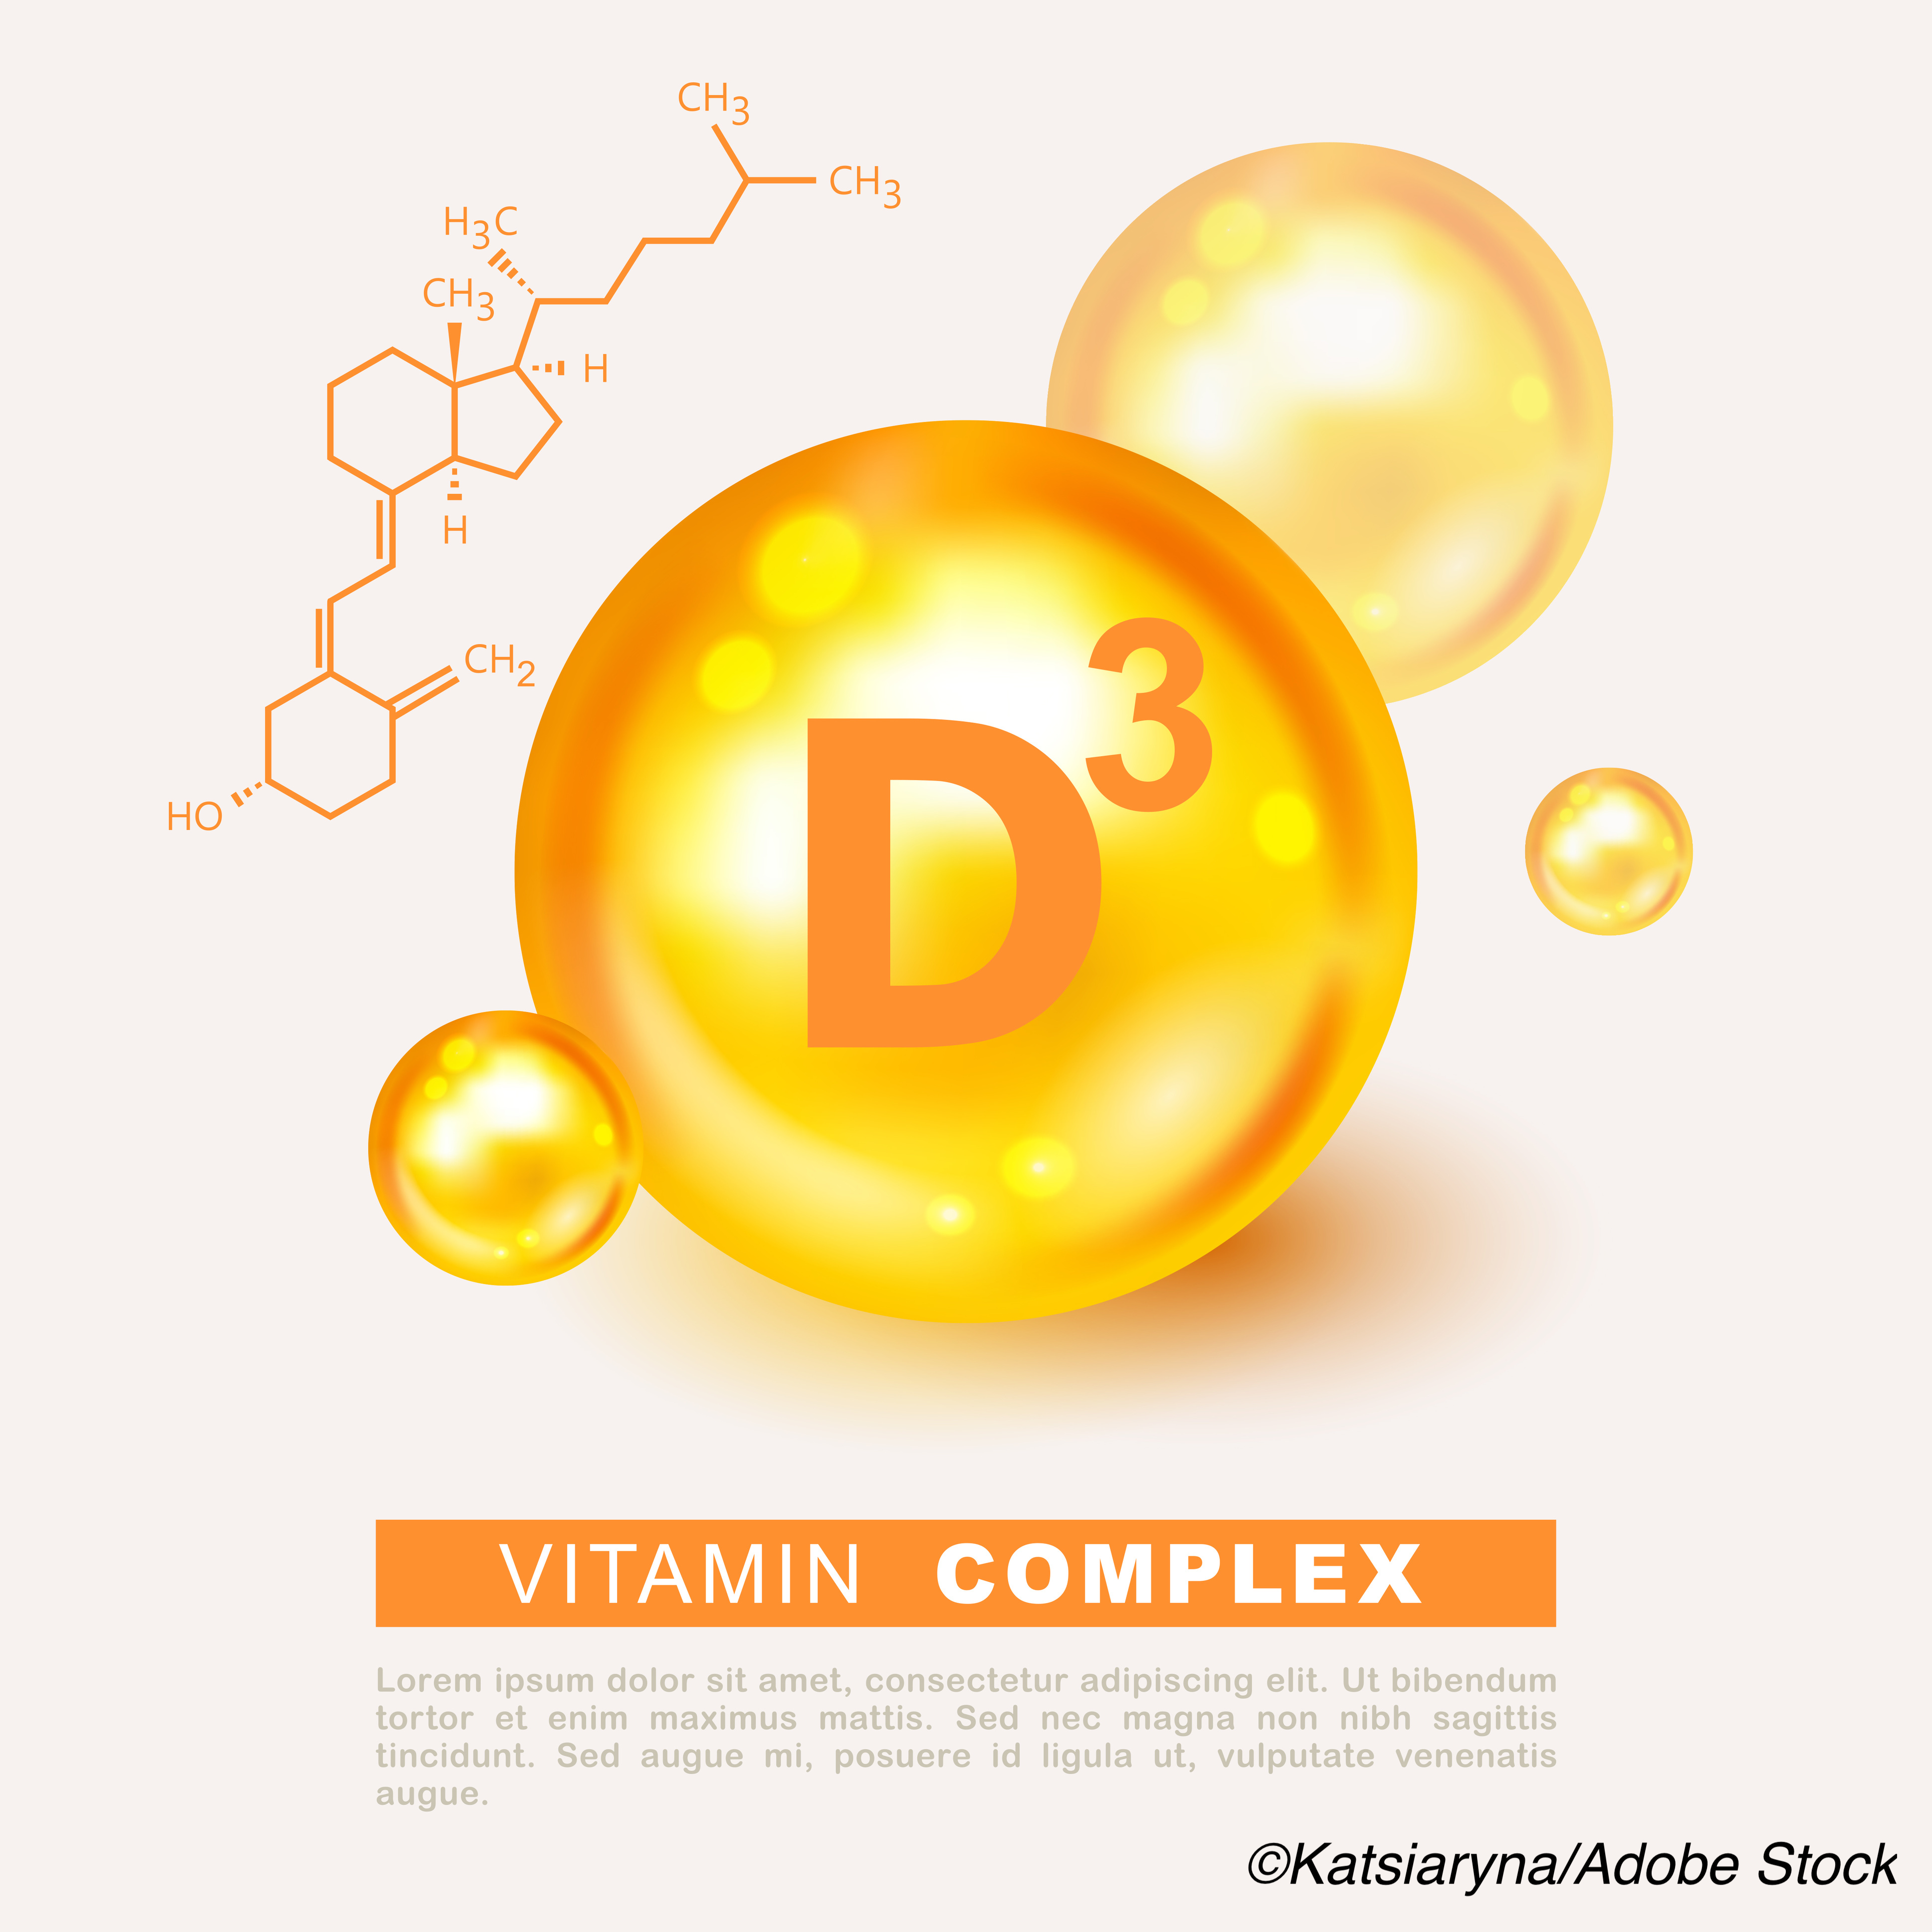 Omega-3, Vitamin D Show No Benefit in Reducing AFib Risk